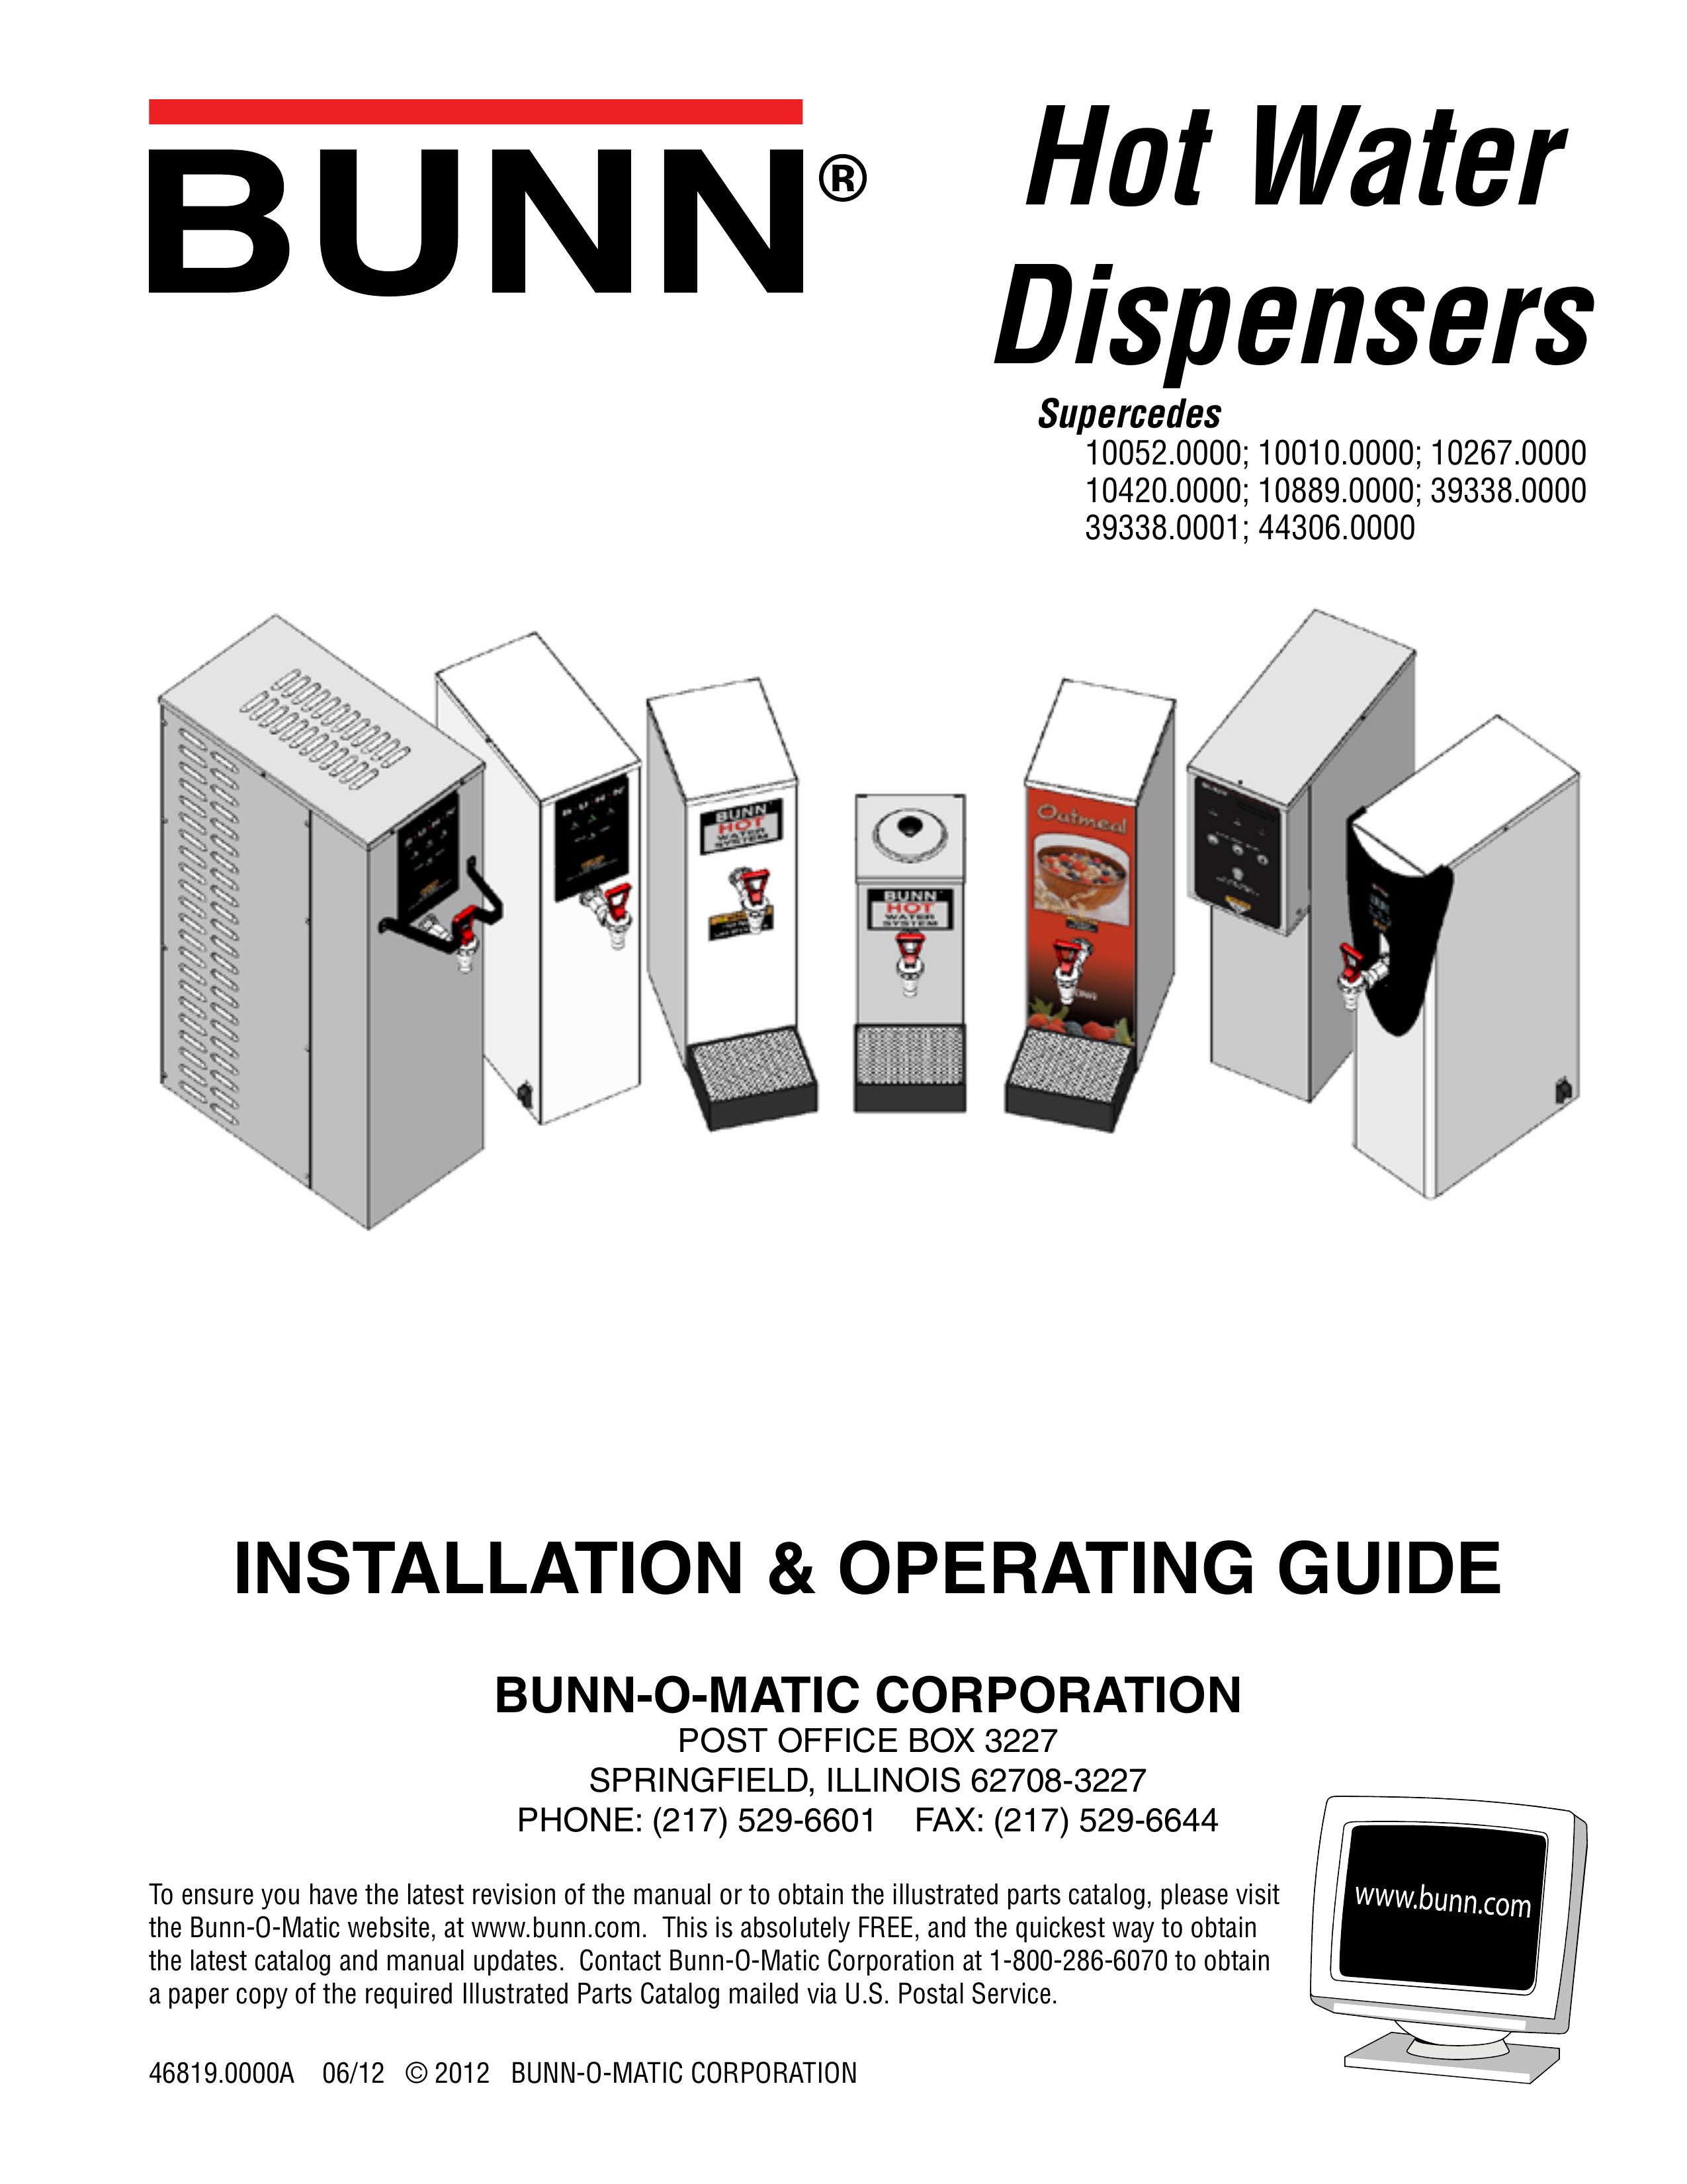 Bunn 10267 Water Dispenser User Manual